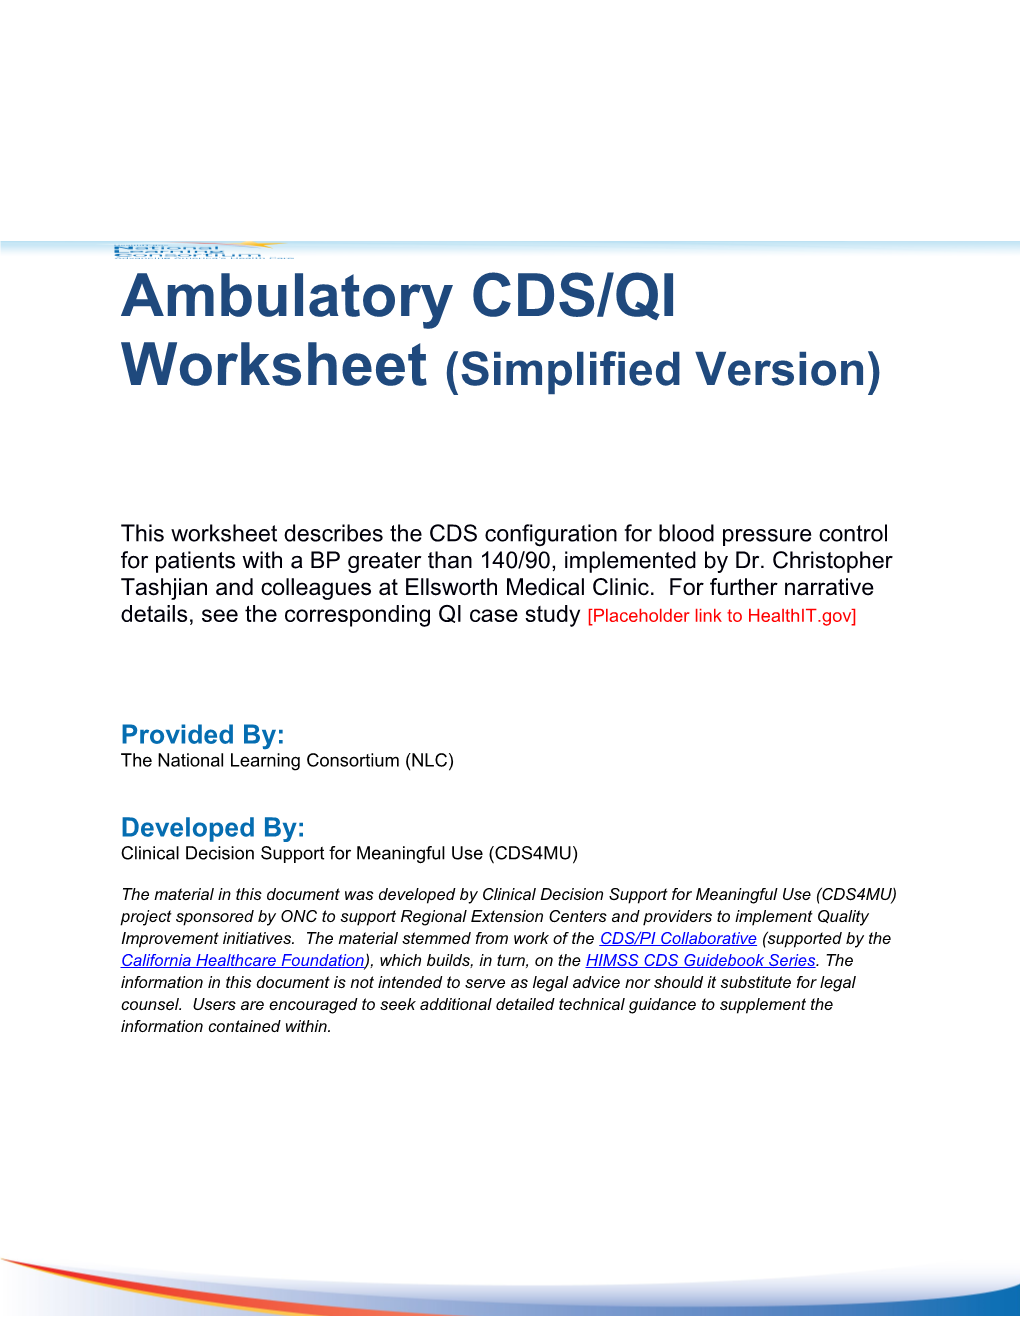 Ambulatorycds/Qiworksheet(Simplified Version)